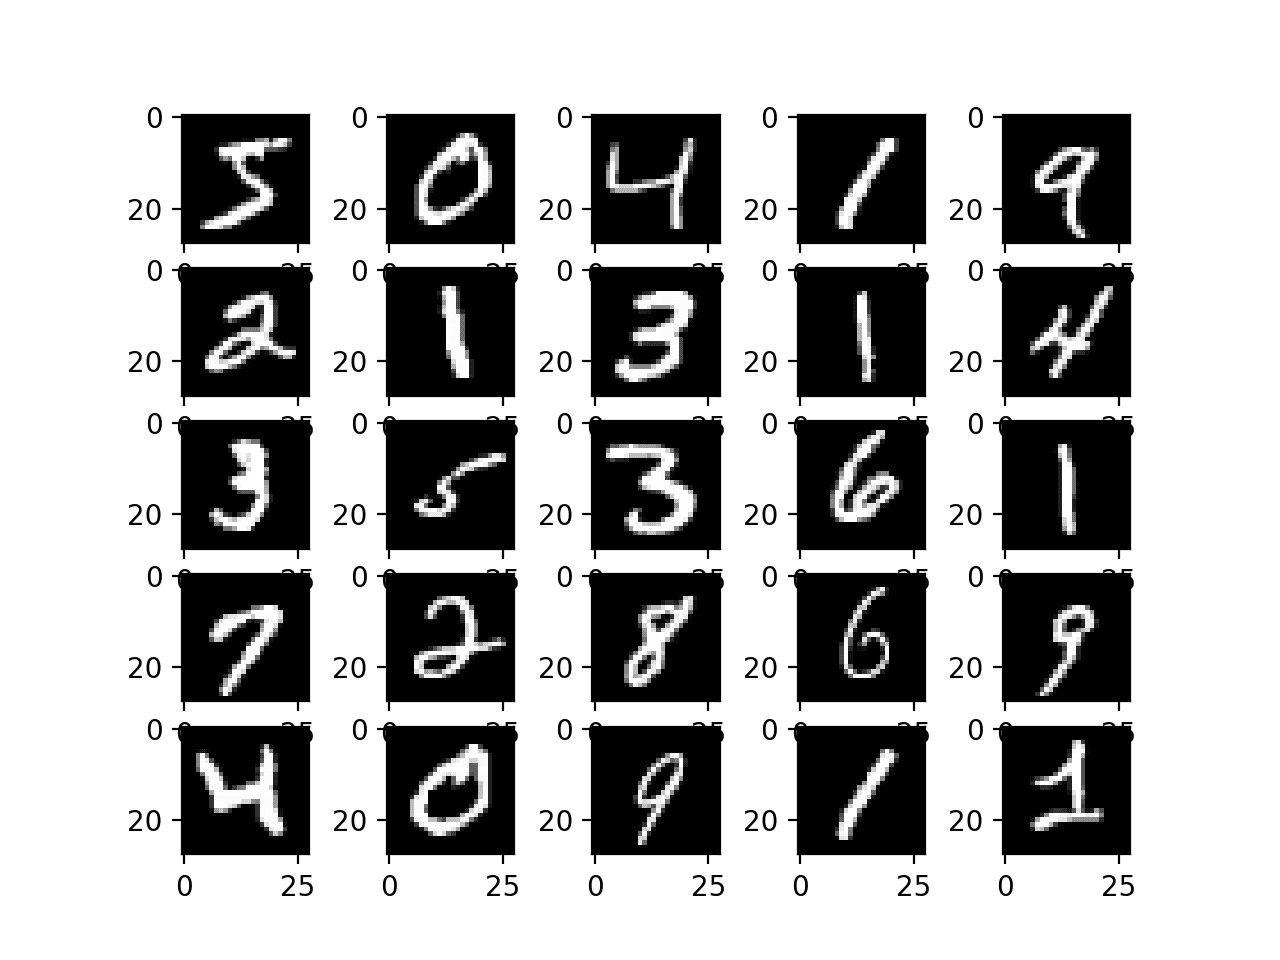 Plot of Handwritten Digits From the MNIST dataset